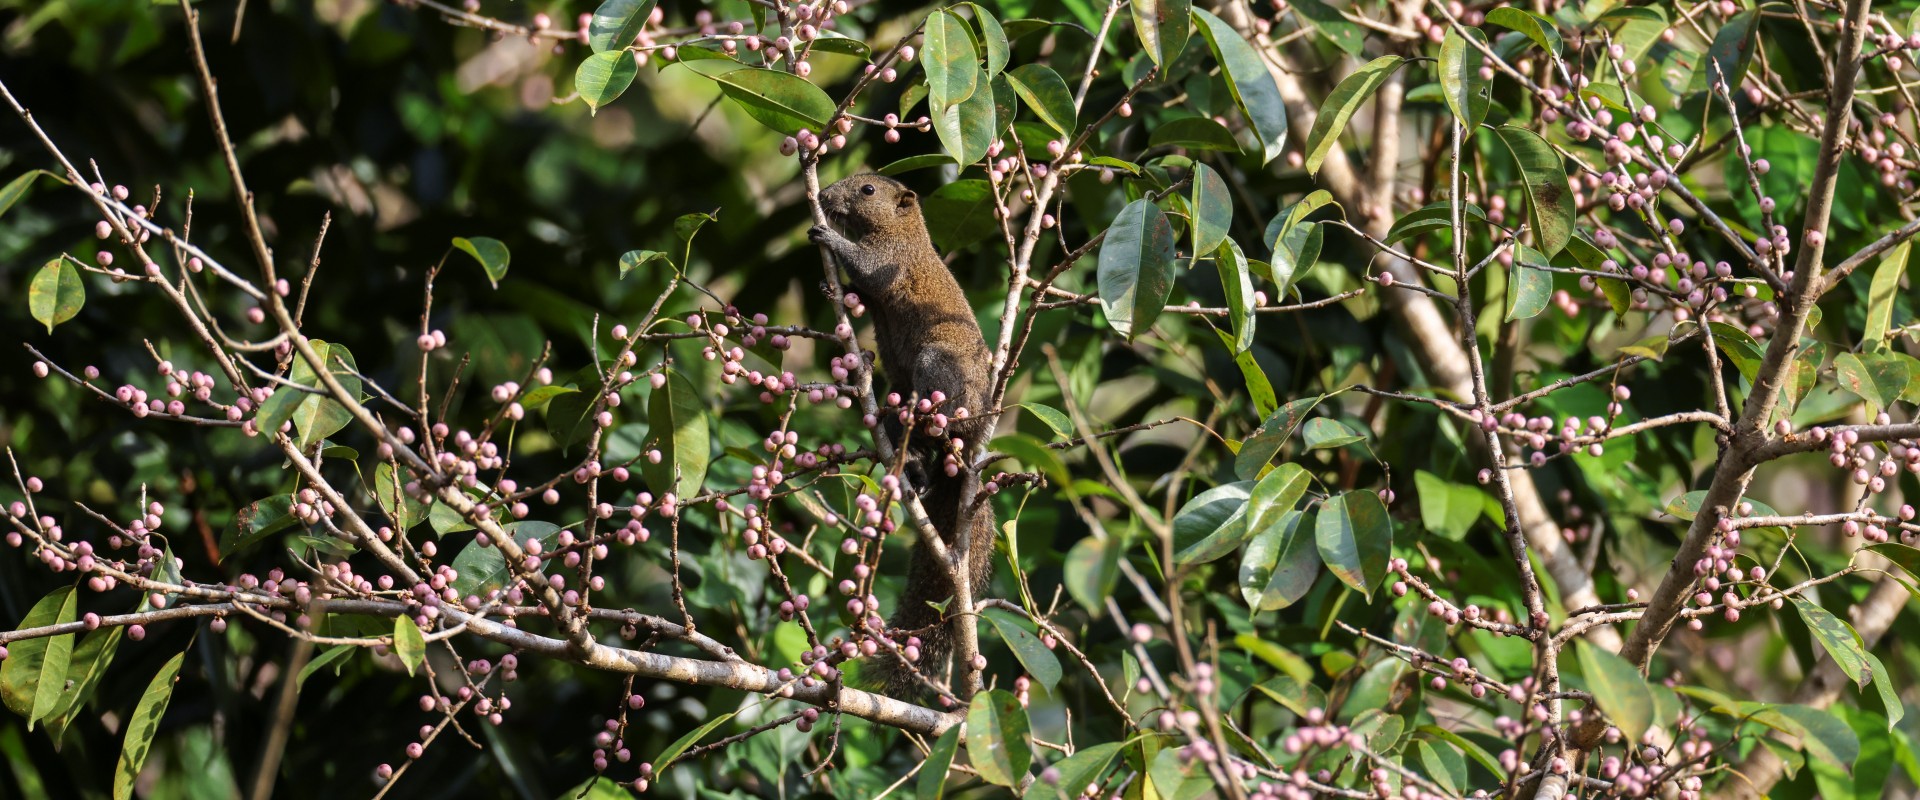 Grey-bellied Squirrel in an Indonesian Bayleaf tree in Teluk Datai © Sanjitpaal Singh